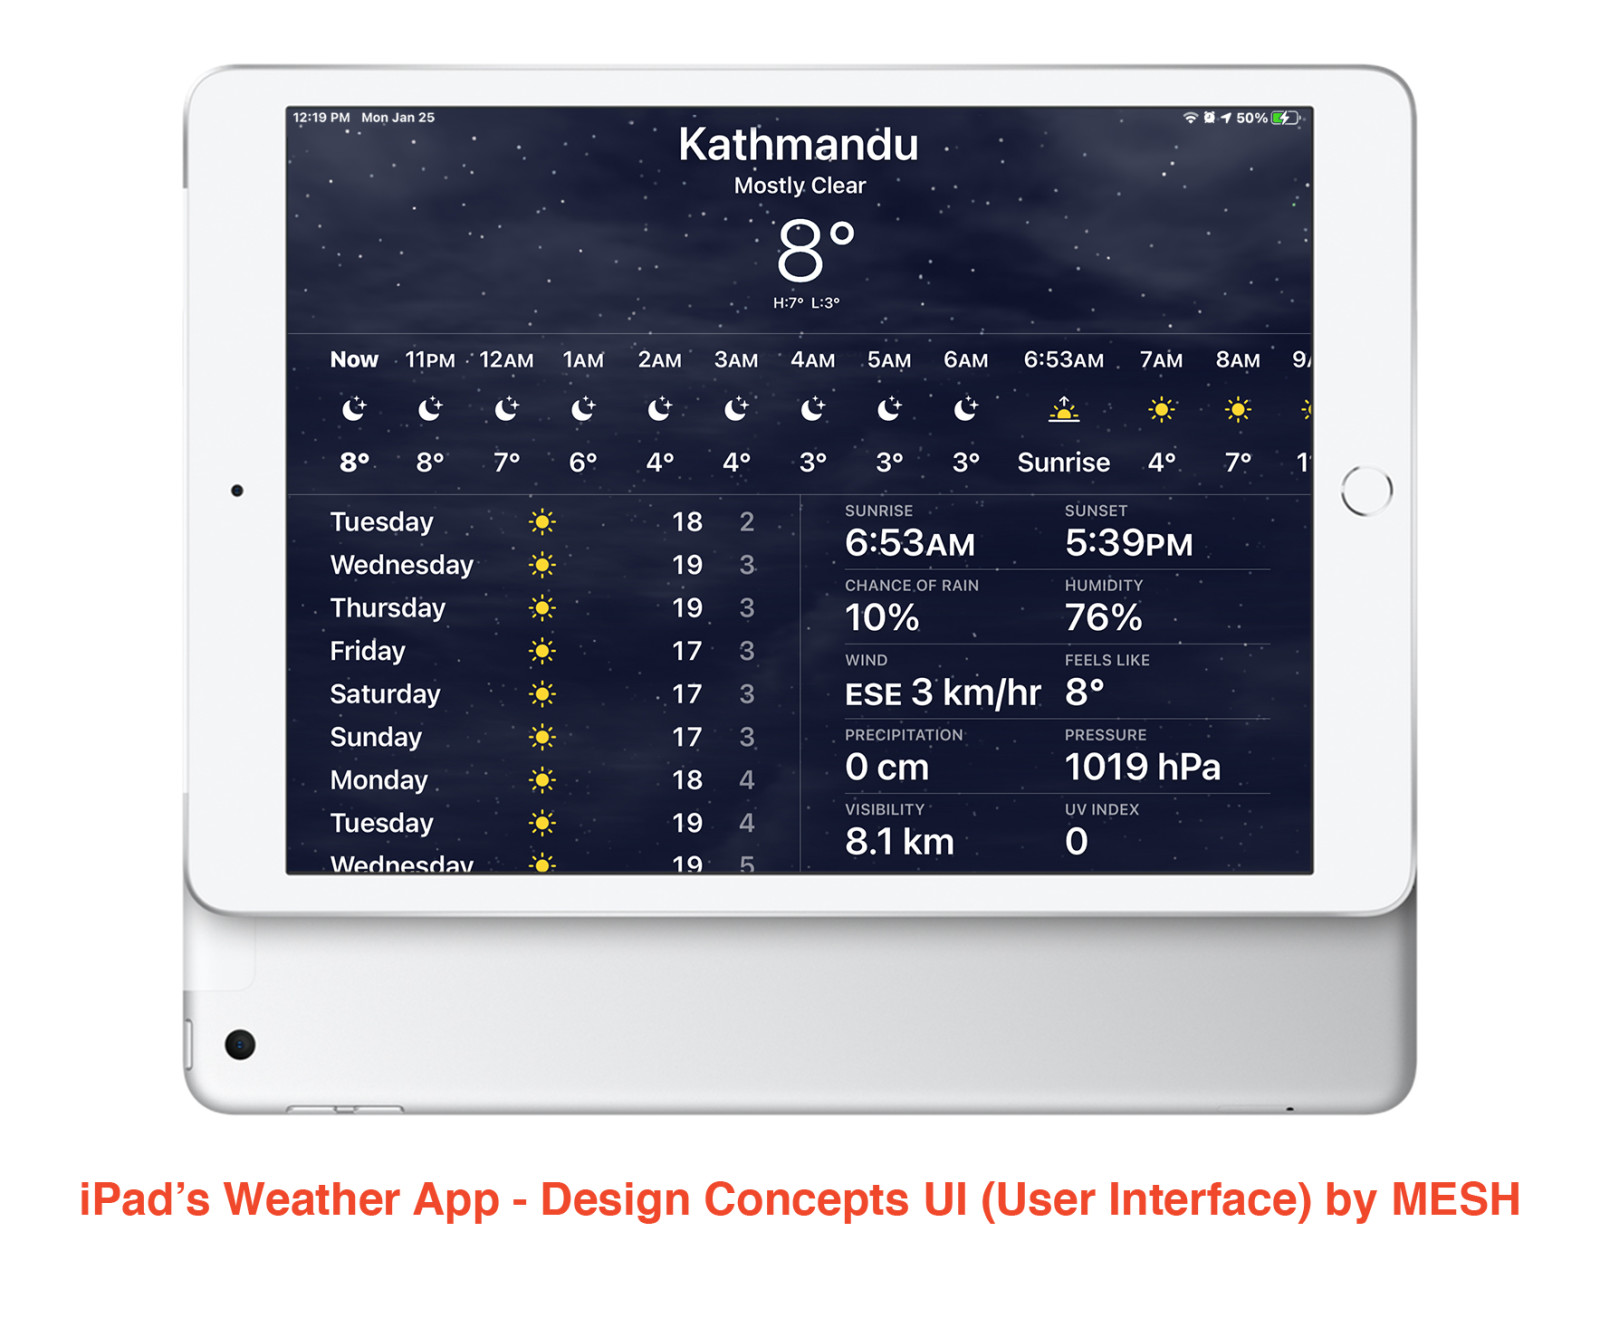 ©-MESHart.ca-2021-Nimesh-Devkota-APPLE-iPad-Kathmandu-UI-Weather-App-Design-by-MESH-Landscape-No-Copying-Without-Explicit-Permission